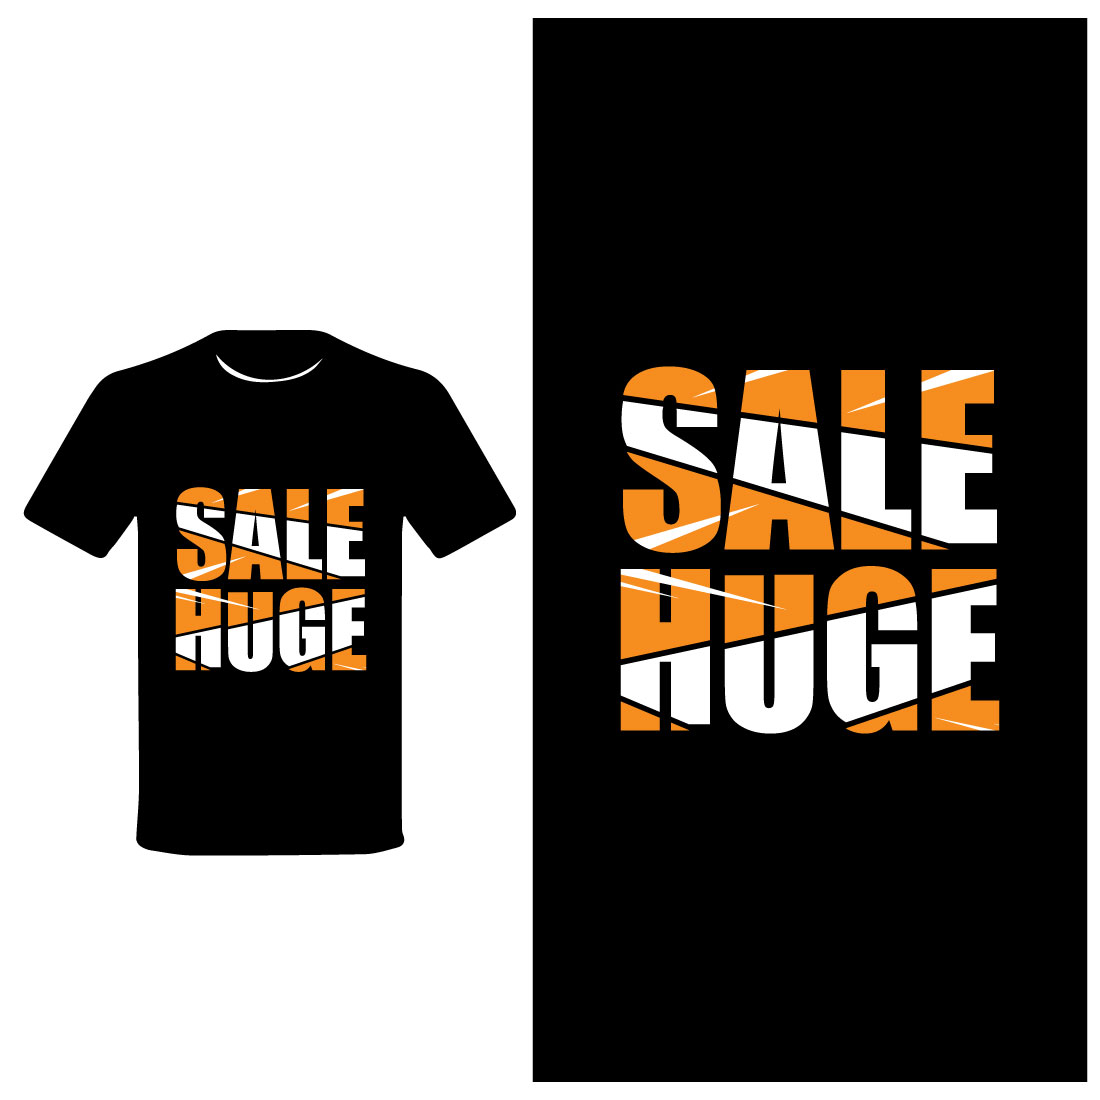 Sale Huge t-shirt design 2024 preview image.